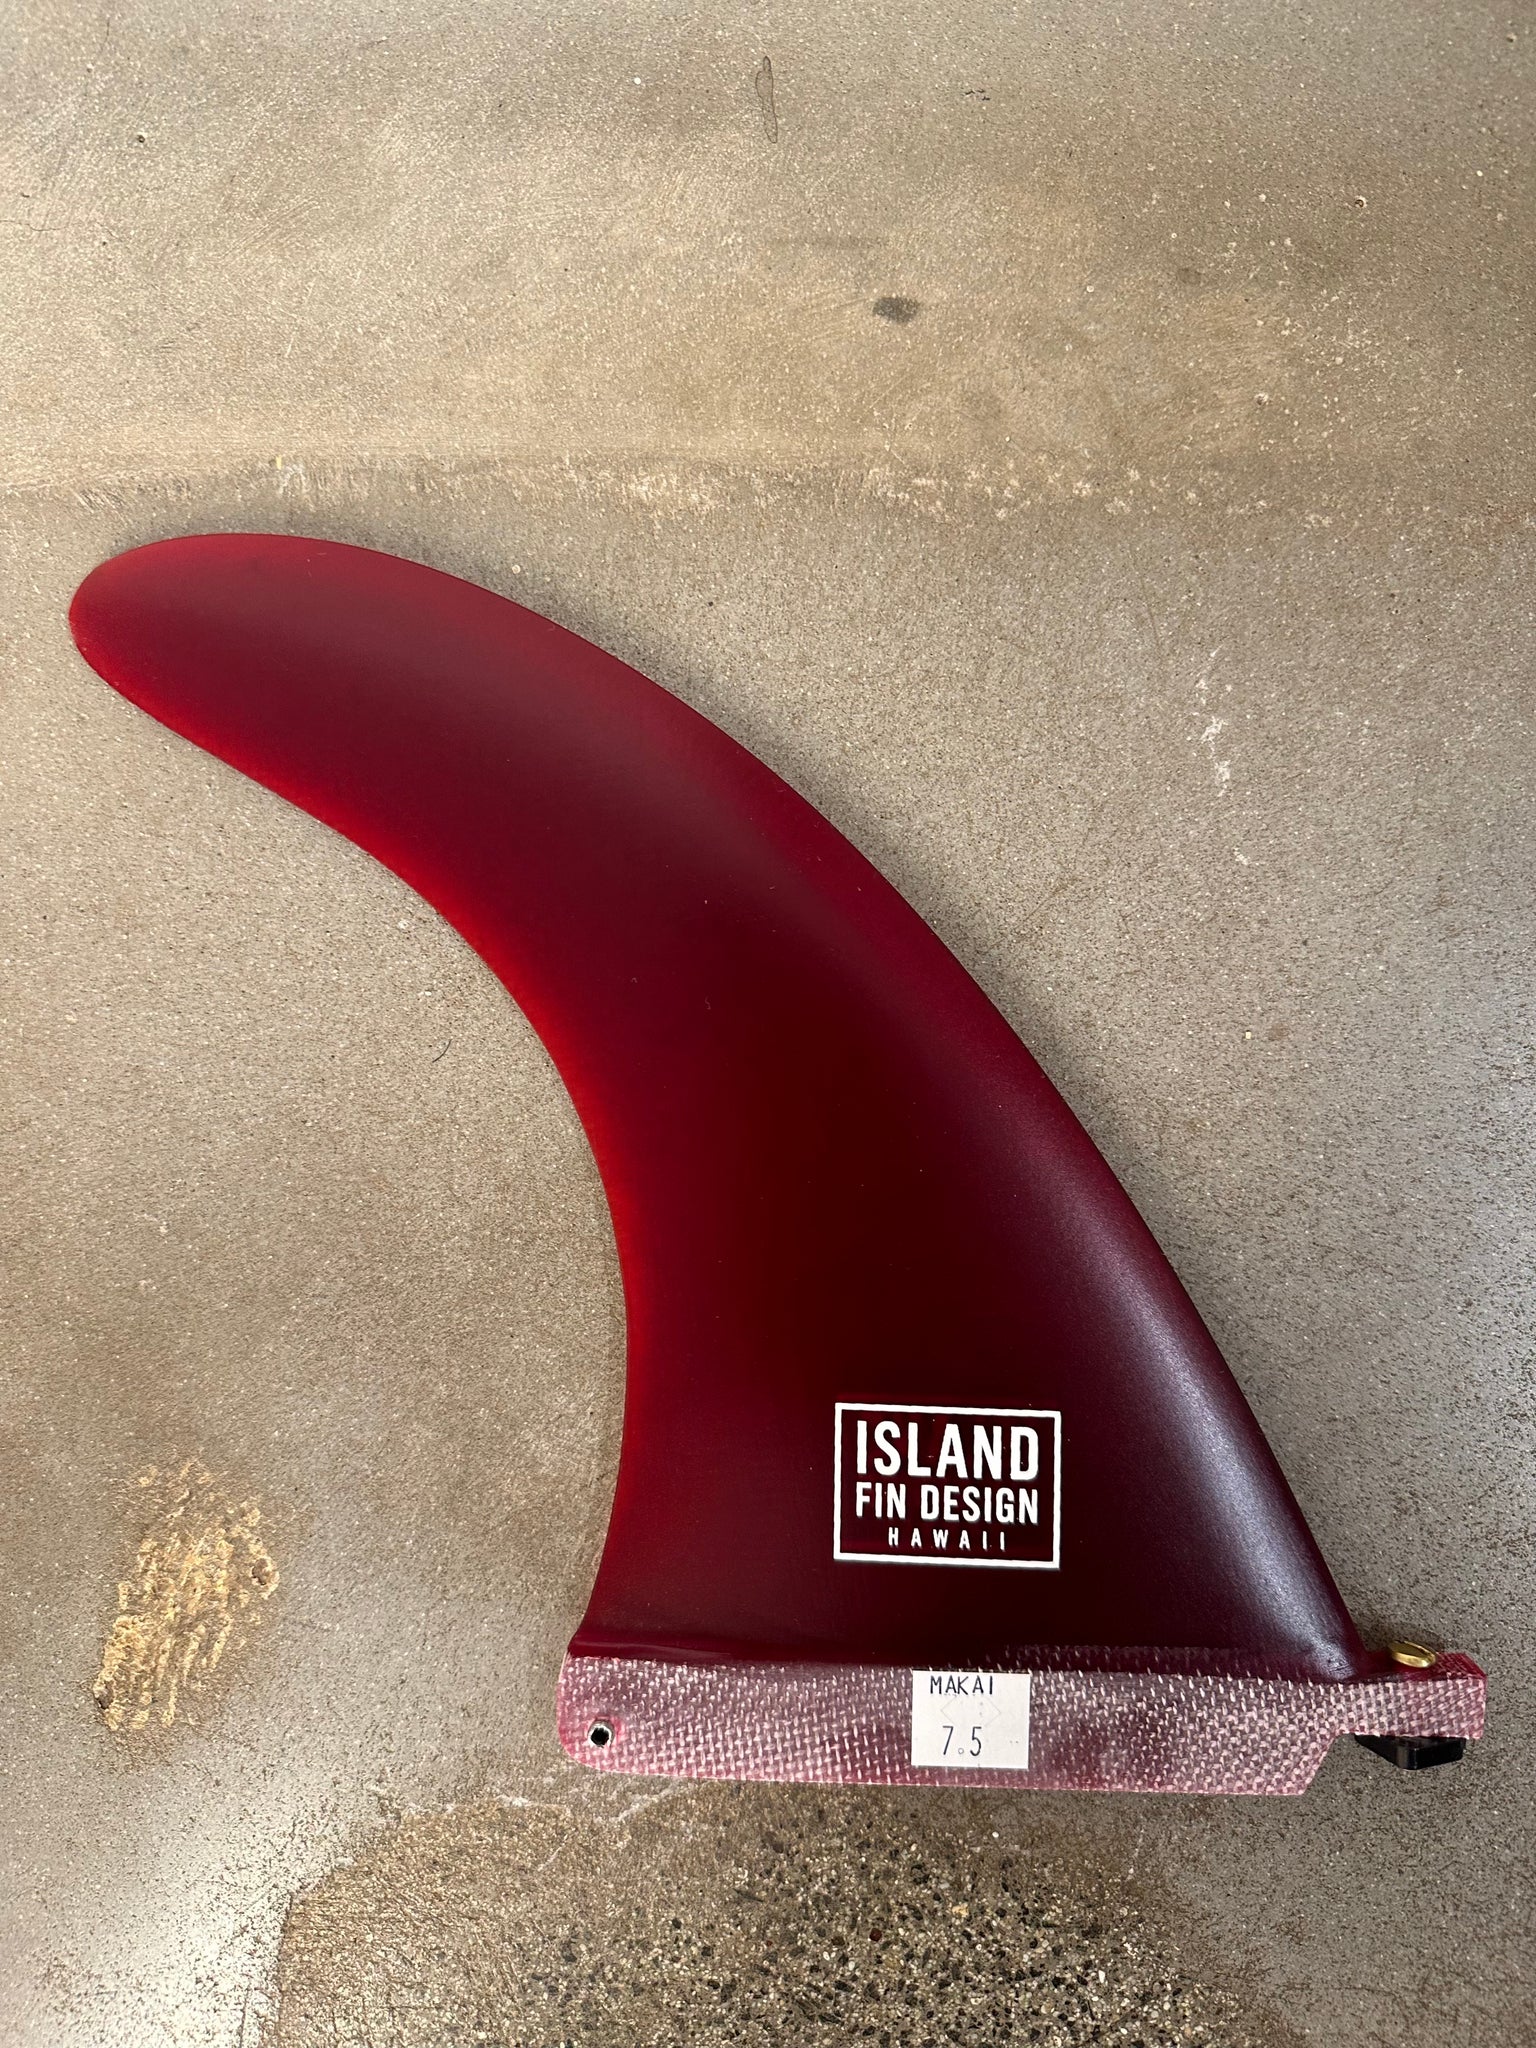 Island Fin Design Makai Red 7.5